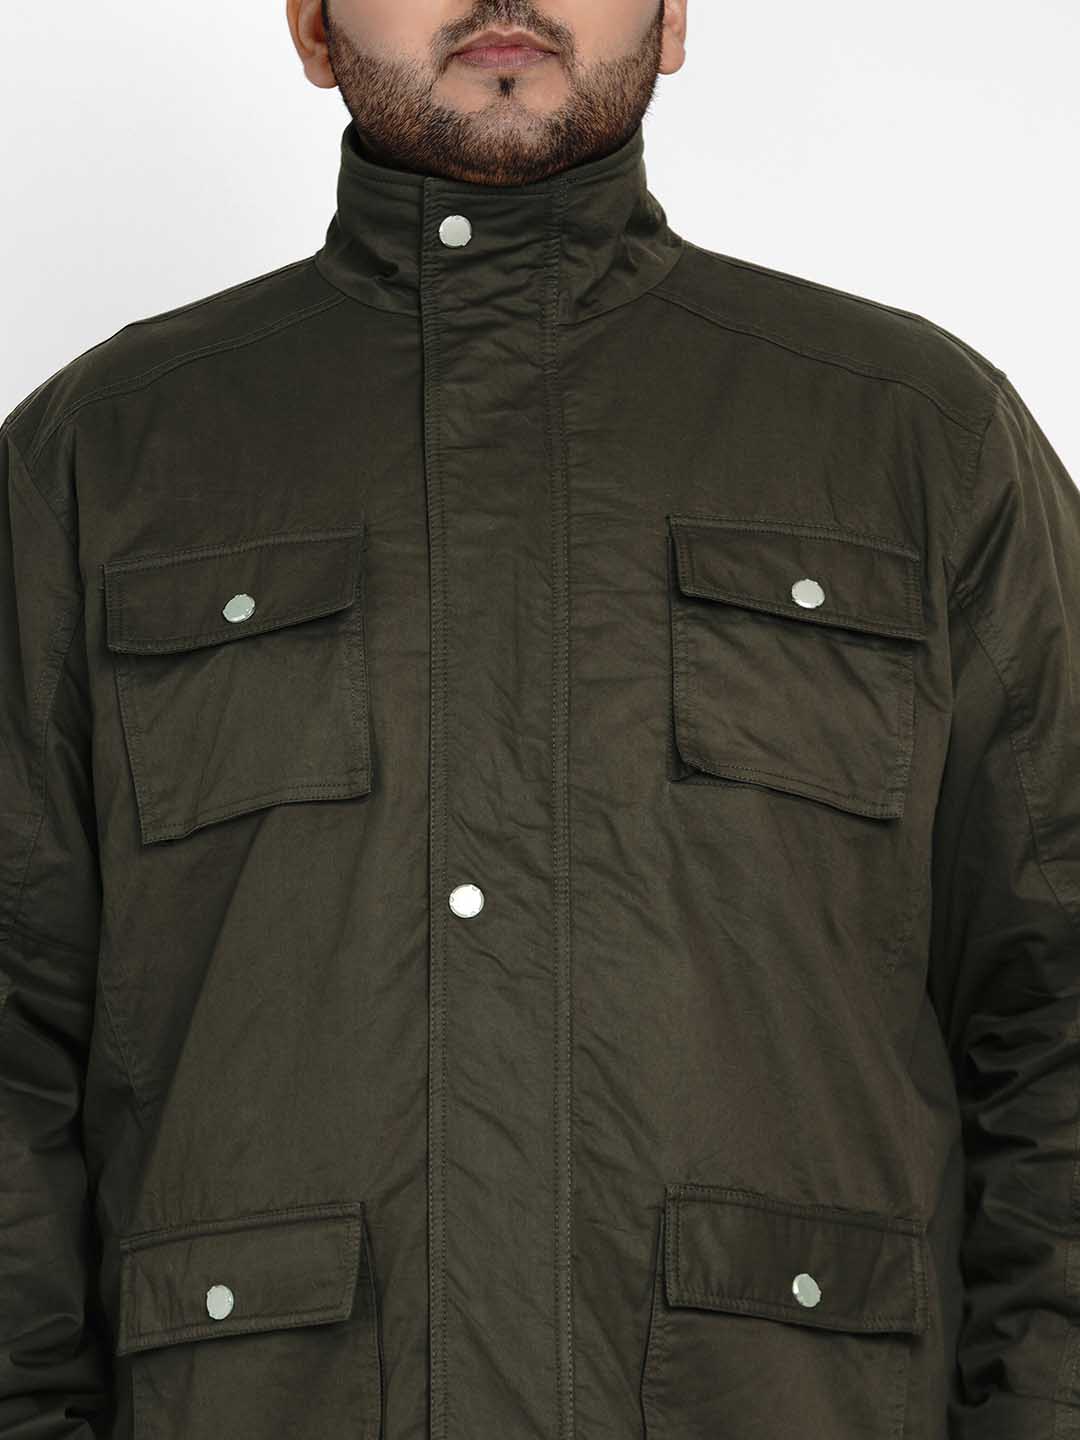 winterwear/jackets/JPJKT7381/jpjkt7381-2.jpg